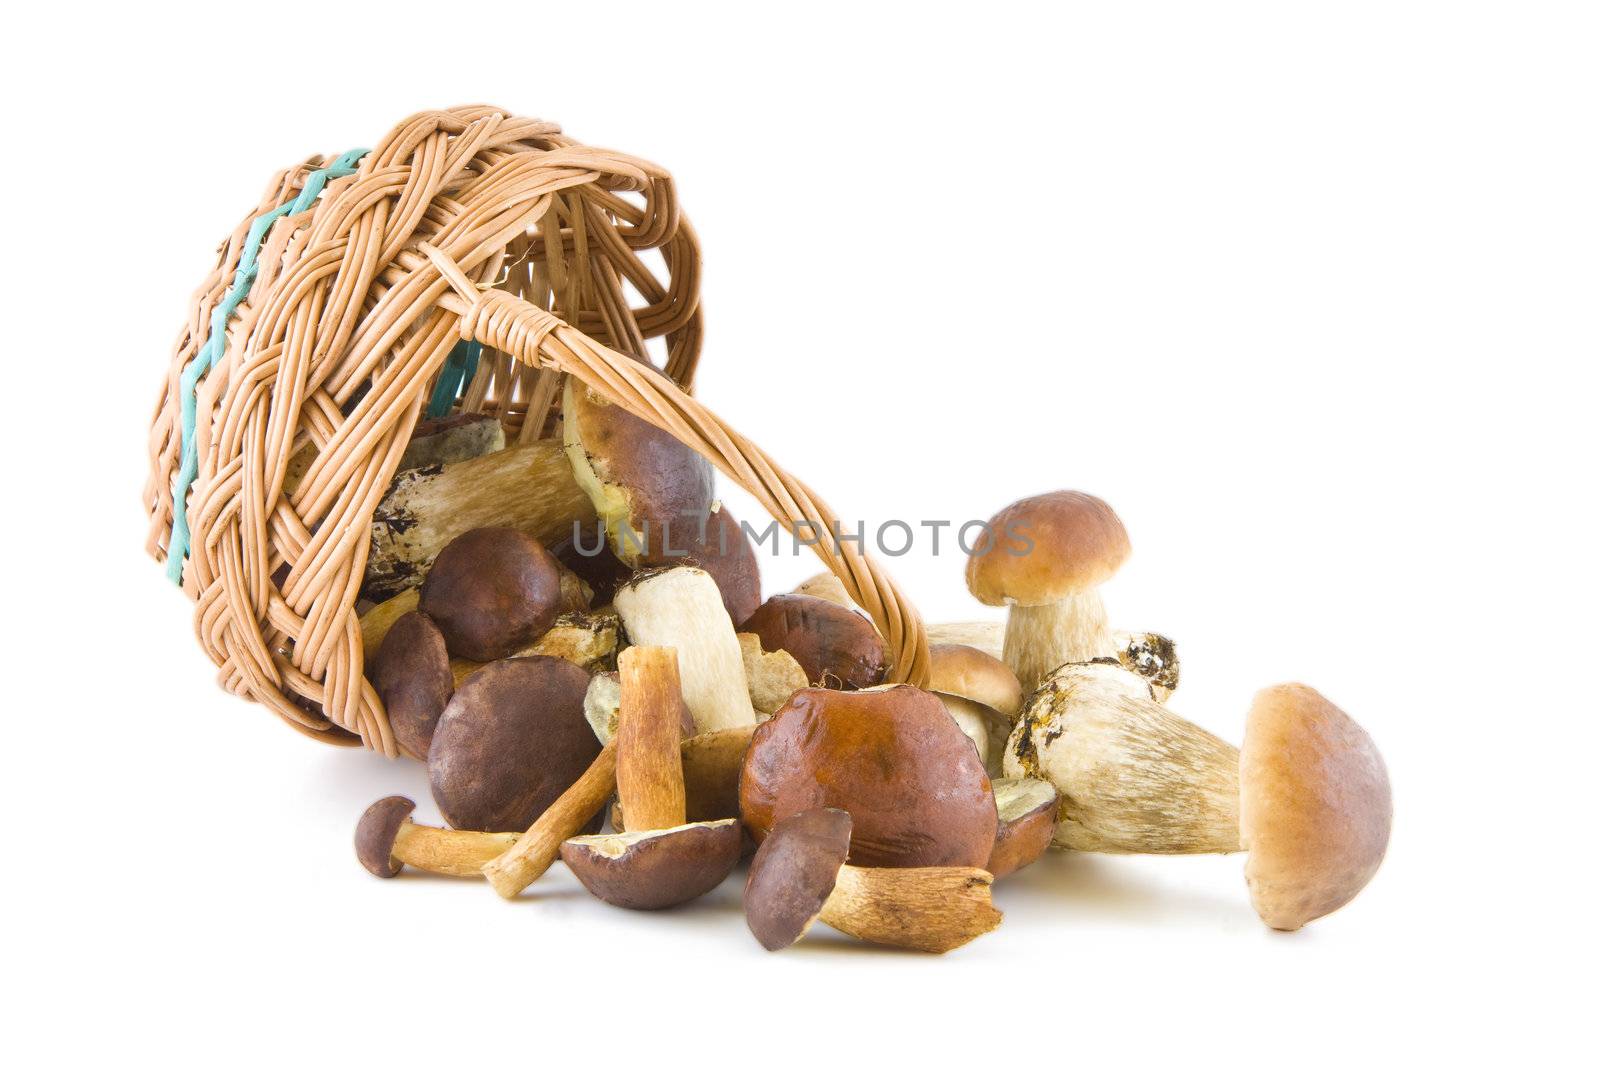 Mushrooms and a basket by Gbuglok